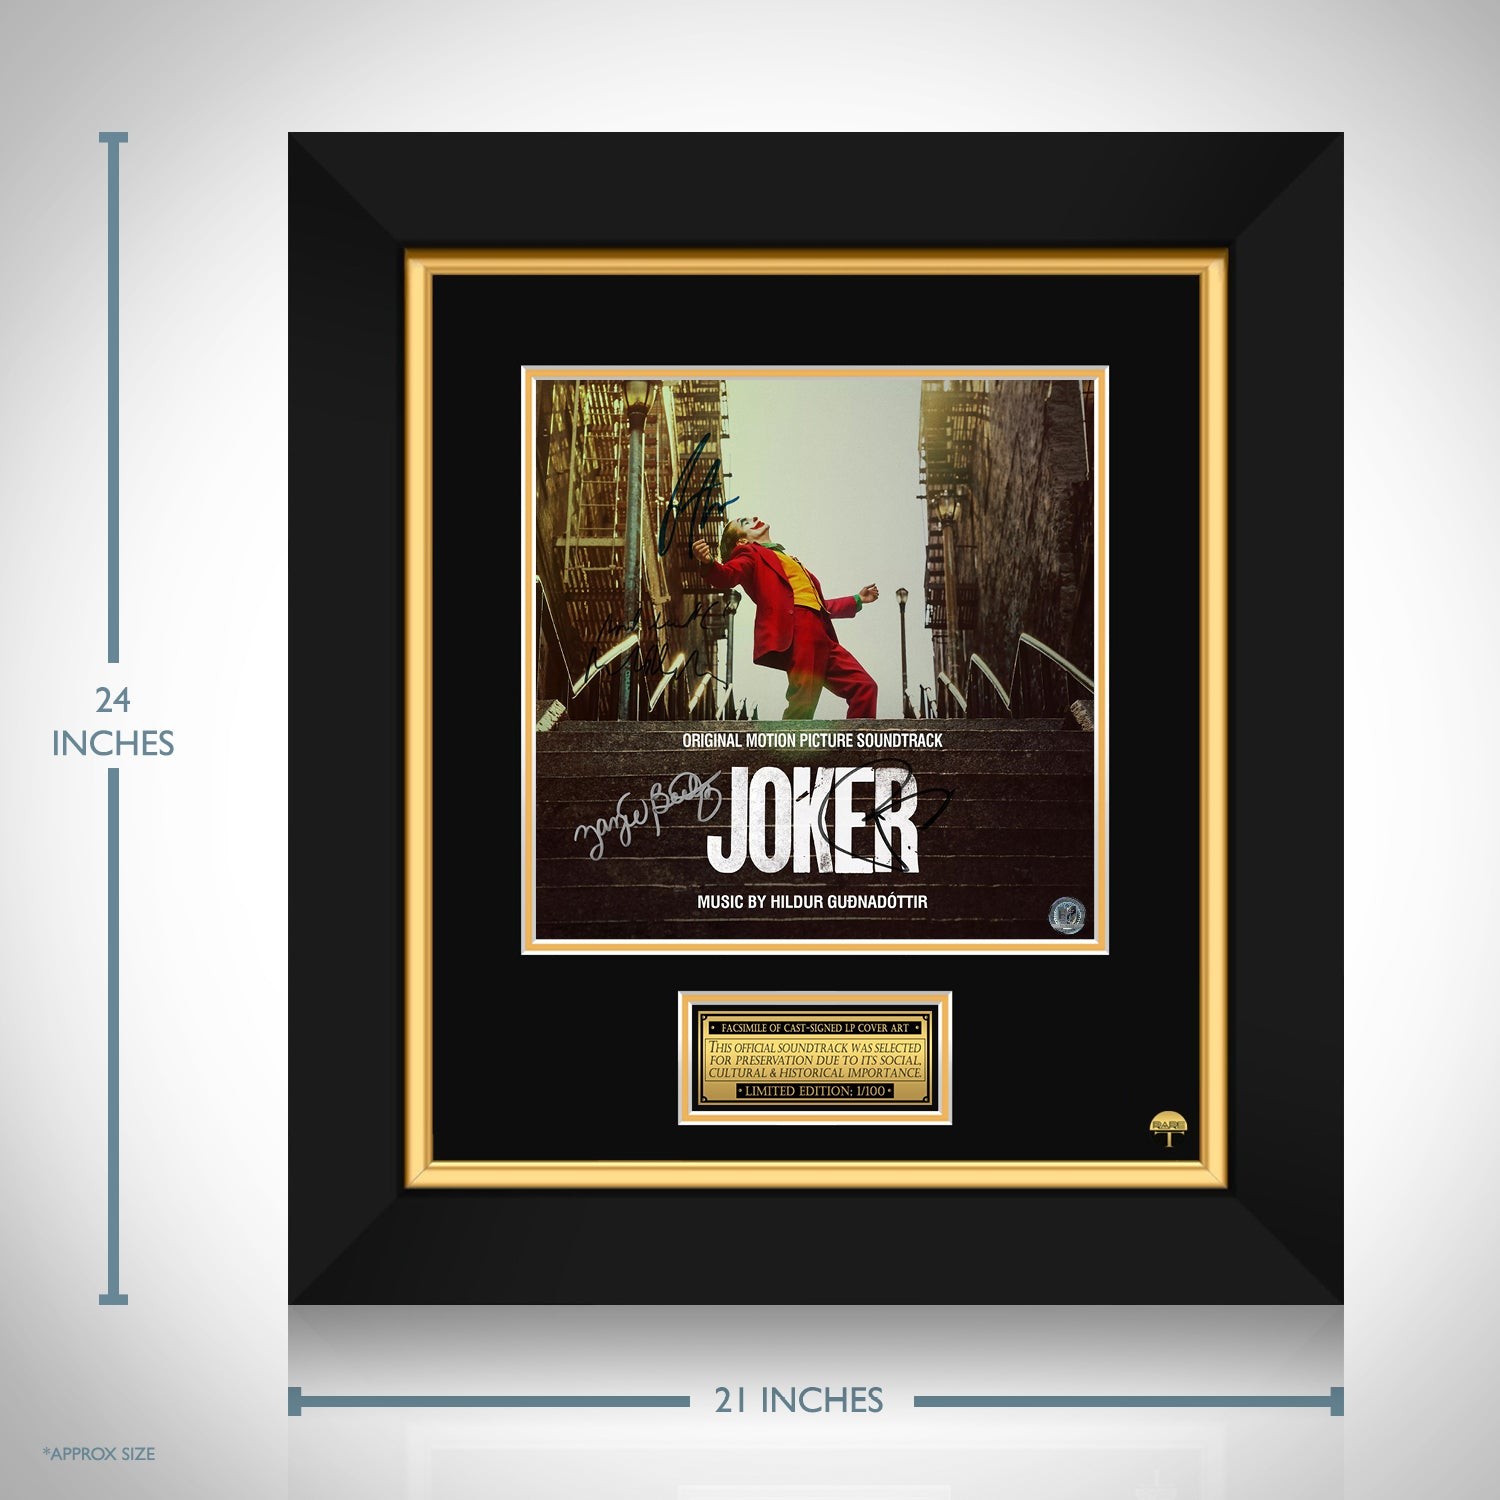 Joker (2019) - Custom Criterion Collection Cover